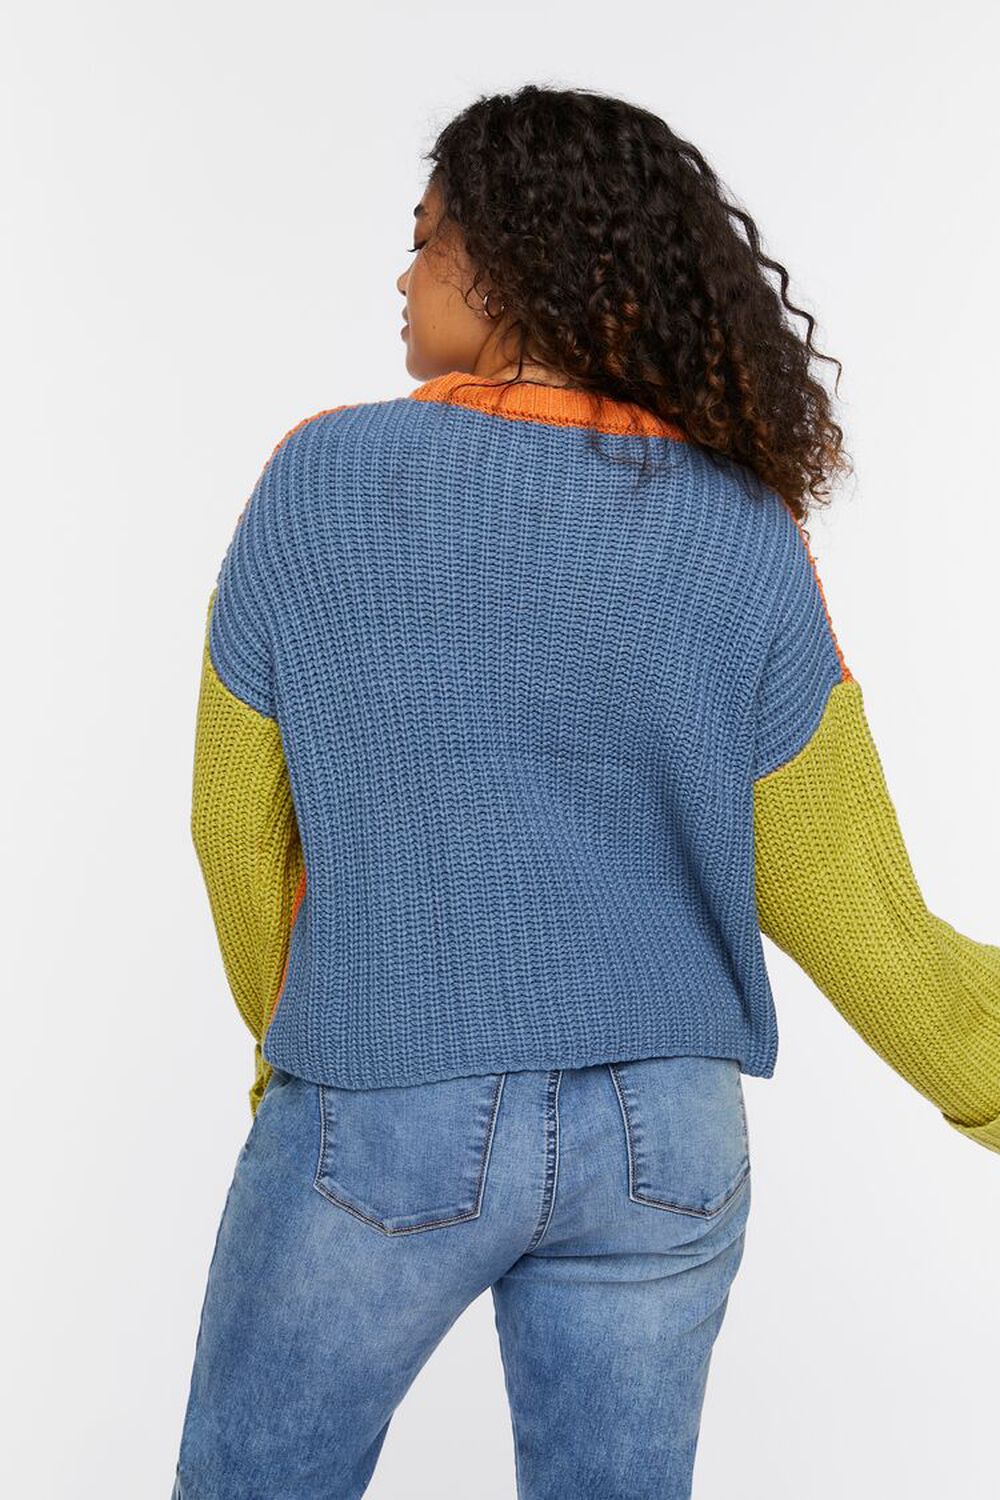 APRICOT/MULTI Plus Size Colorblock Sweater, image 3